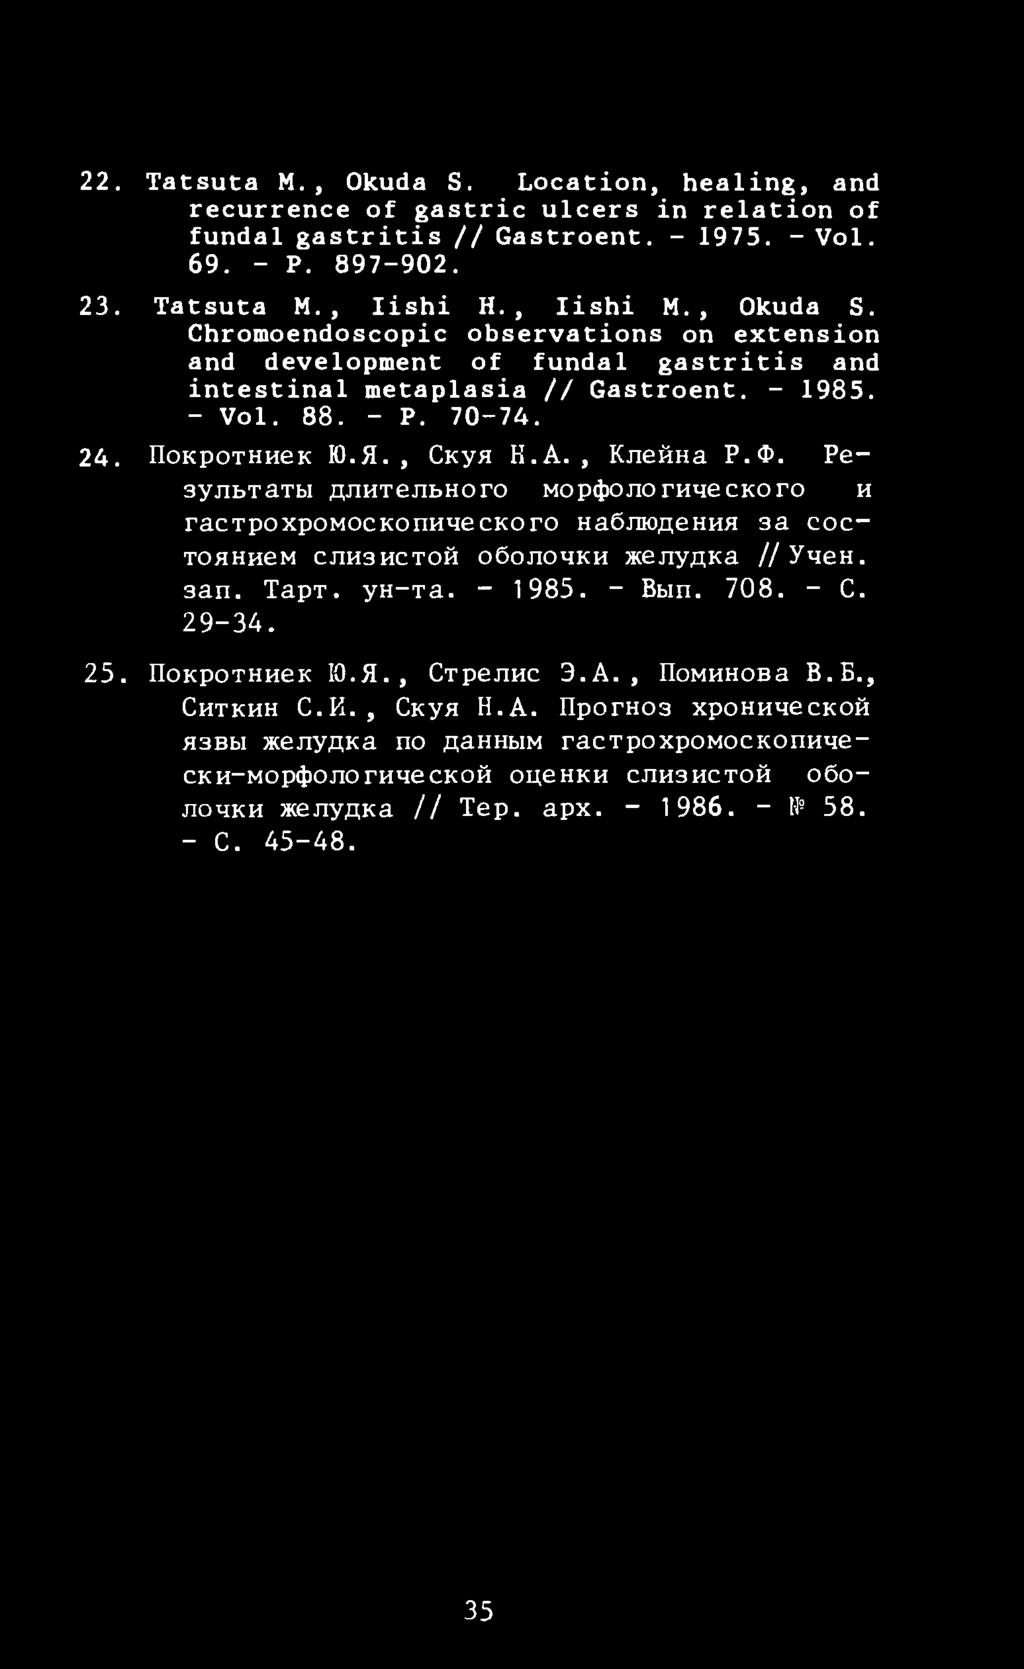 22. Tatsuta M., Okuda S. Location, healing, and recurrence of gastric ulcers in relation of fundal gastritis // Gastroent. - 1975. - Vol. 69. - P. 897-902. 23. Tatsuta M., Iishi H., Iishi M., Okuda S. Chromoendoscopic observations on extension and development of fundal gastritis and intestinal metaplasia // Gastroent.